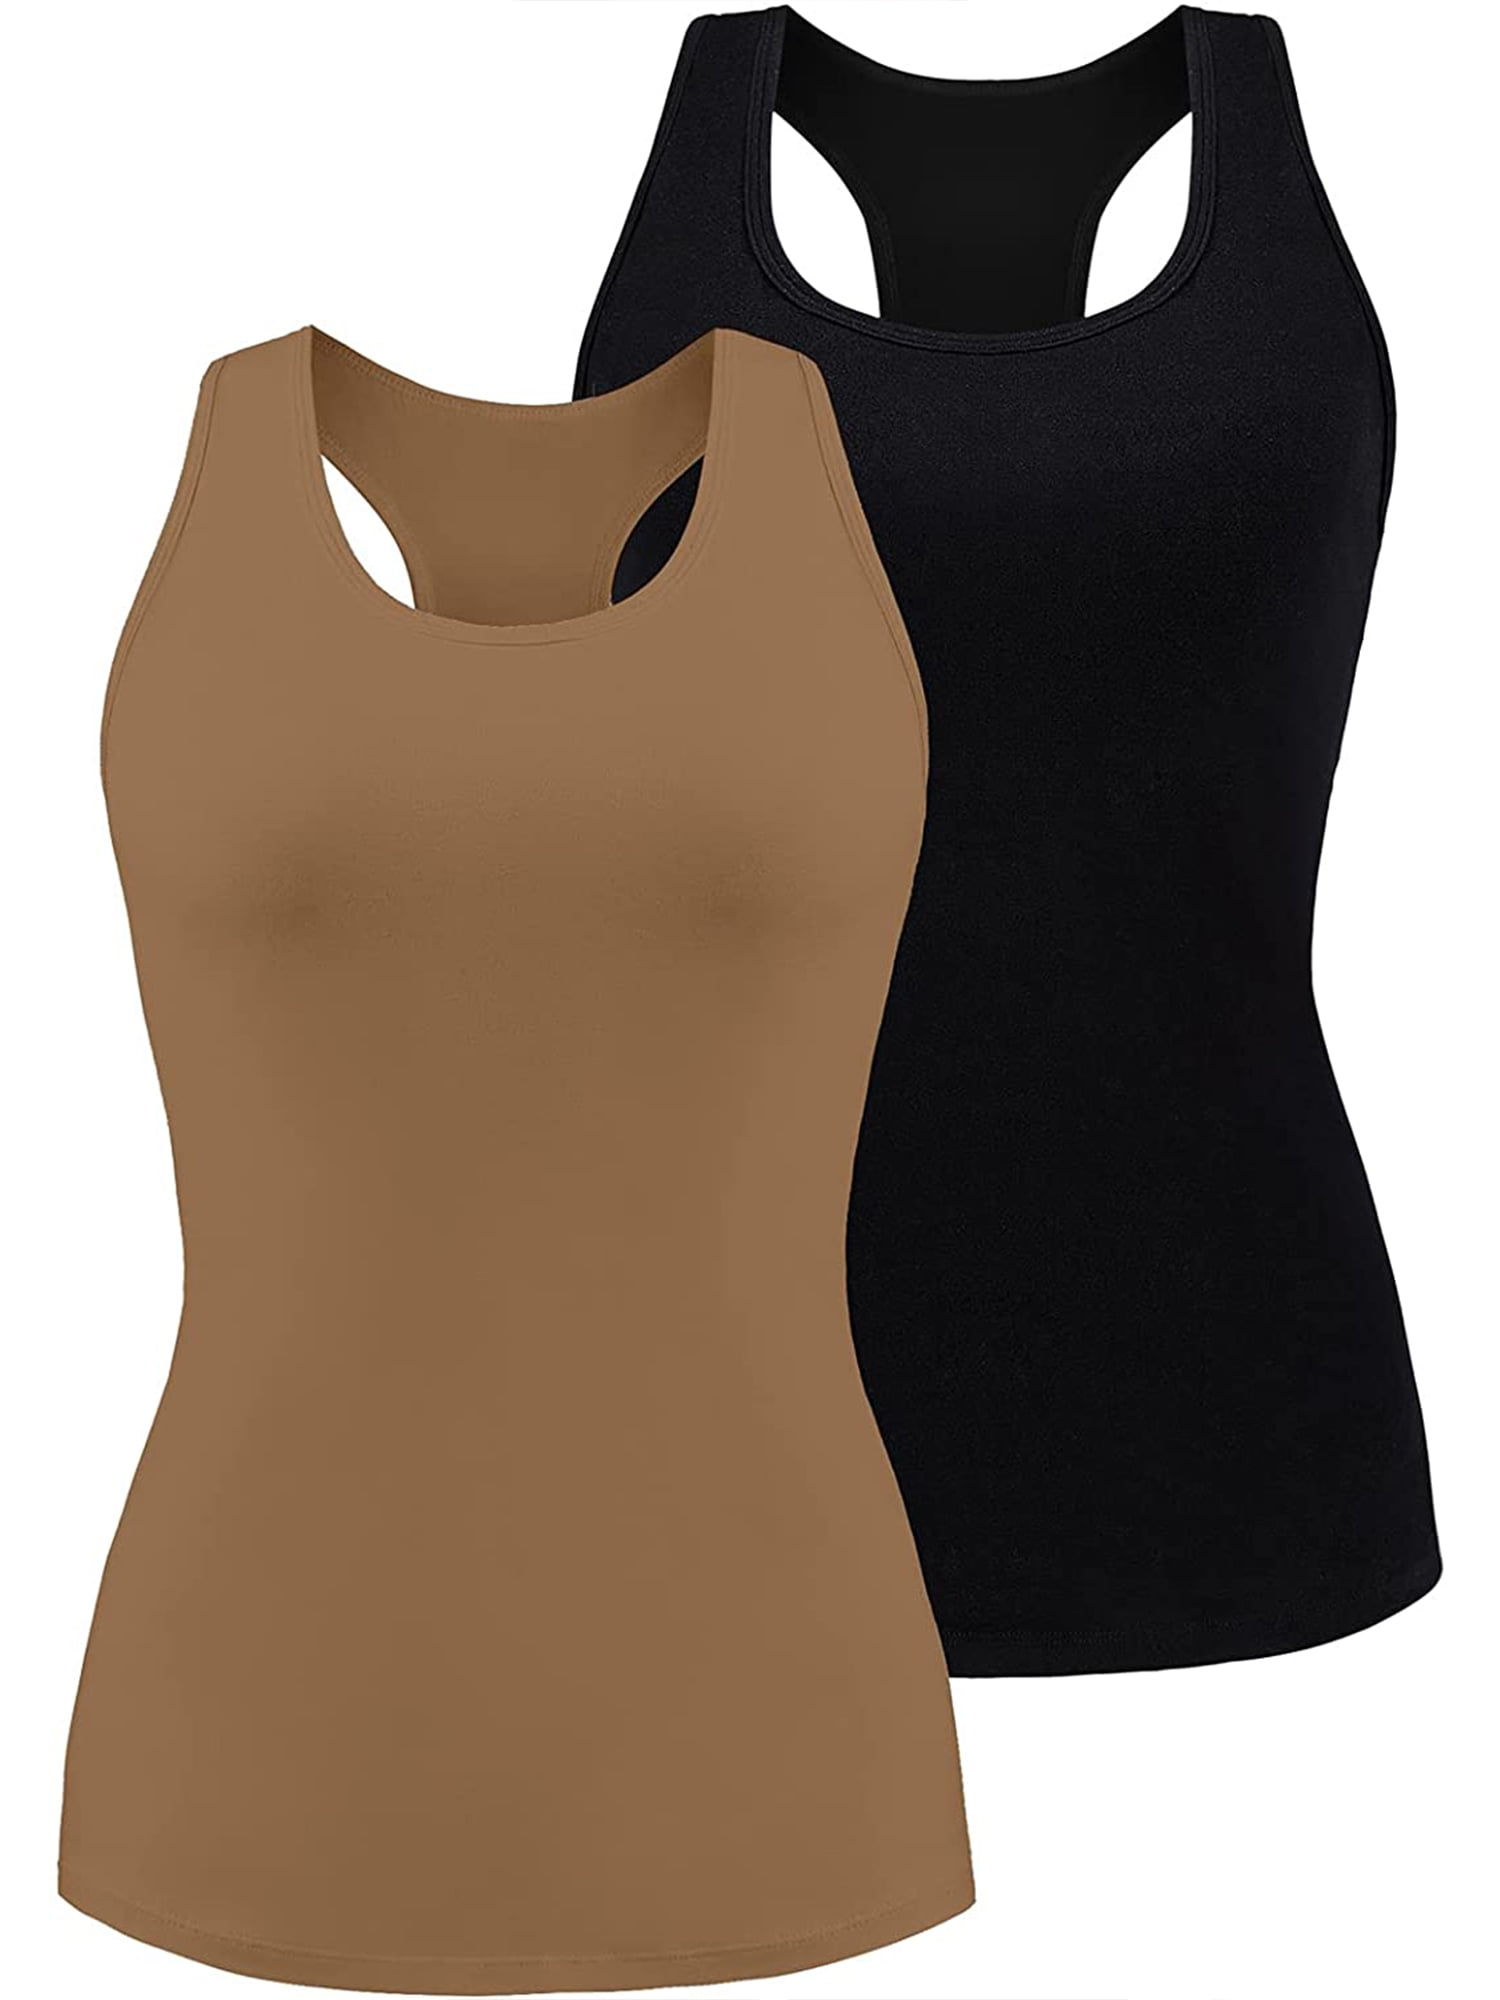 Women's Cotton Racerback Camis Tank Tops with Shelf Bra Undershirt